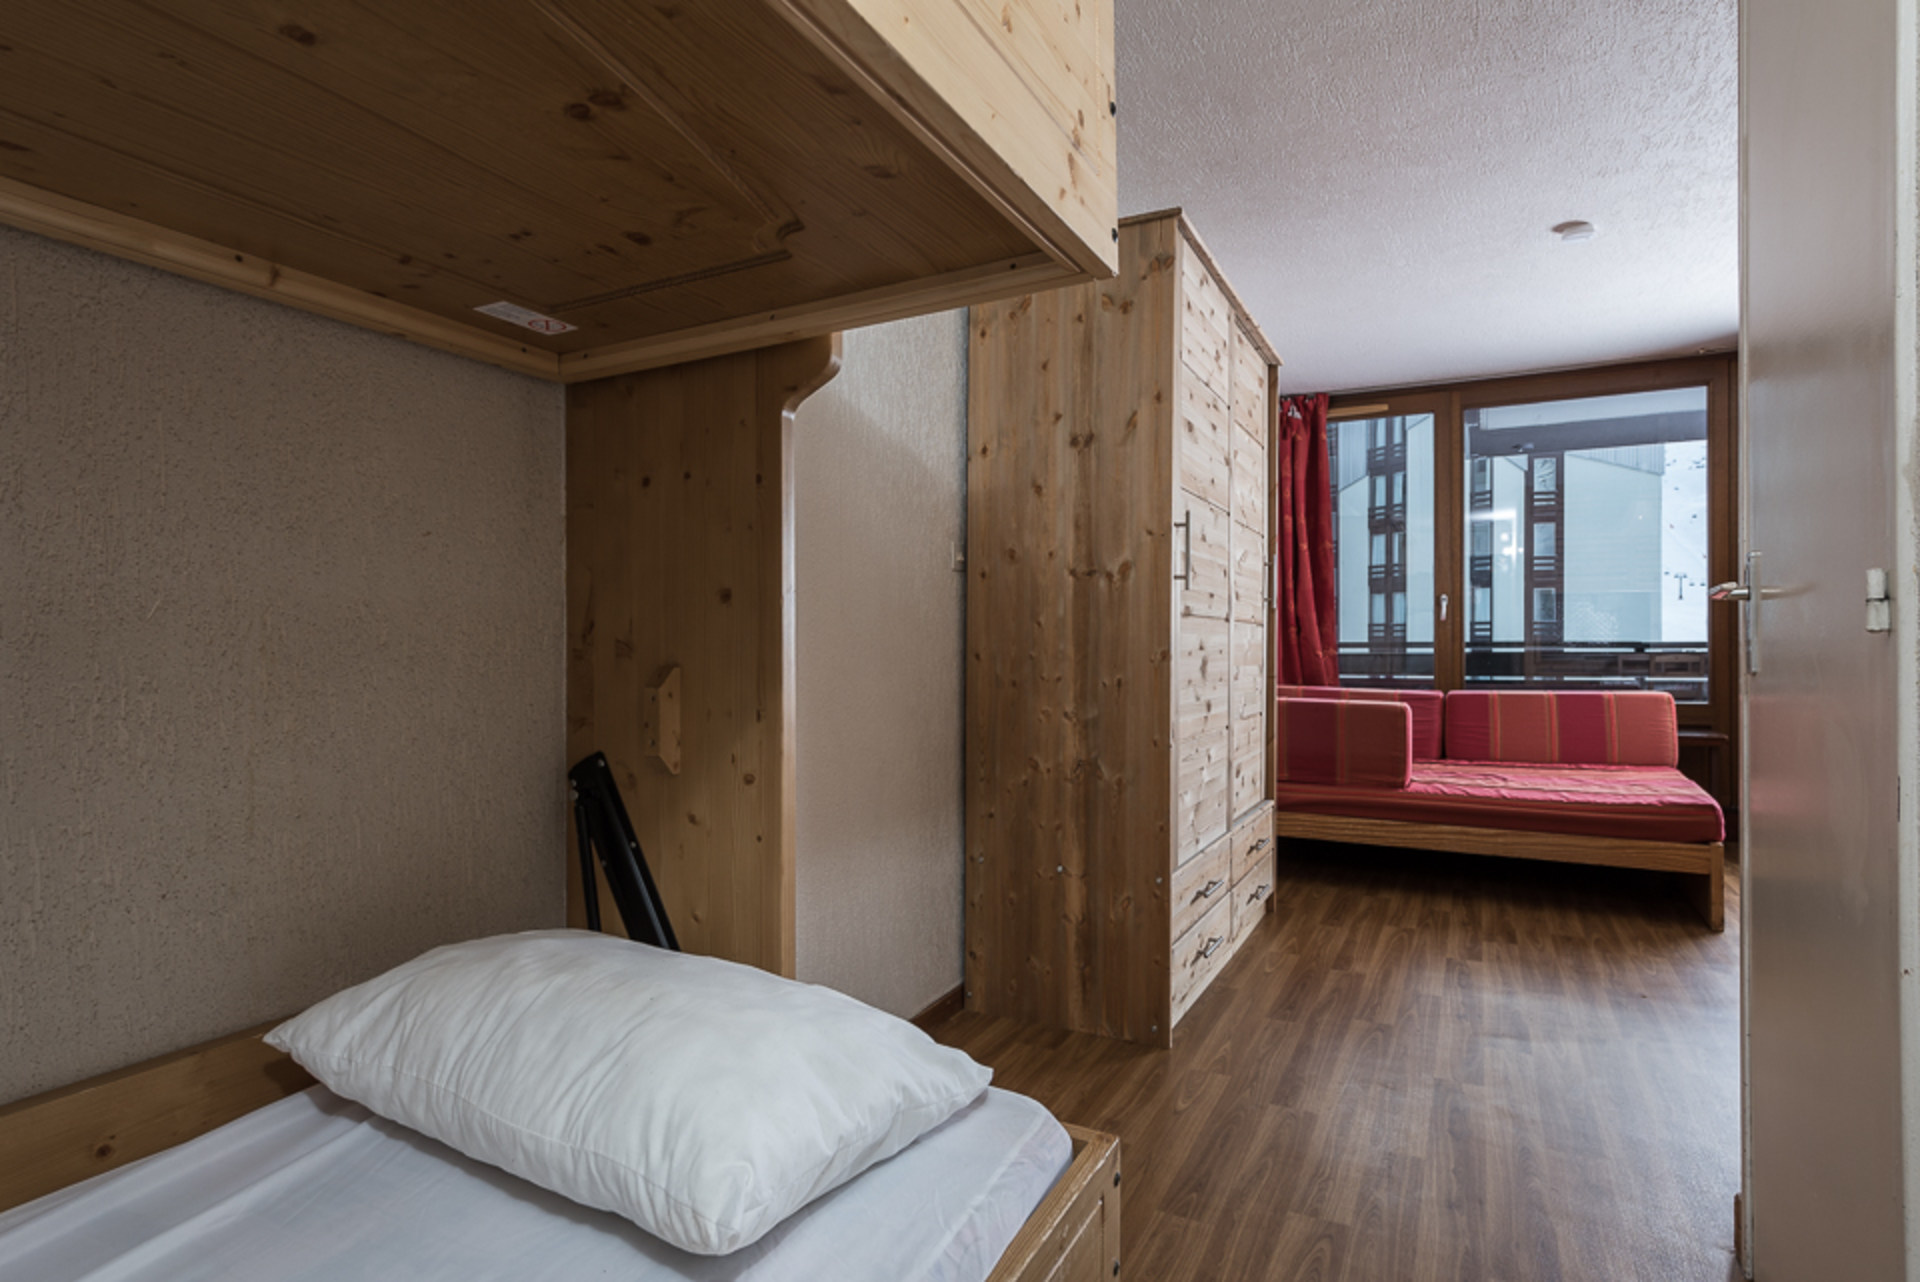 Studio 4 people - travelski home choice - Apartements PRARIOND A - Tignes Val Claret